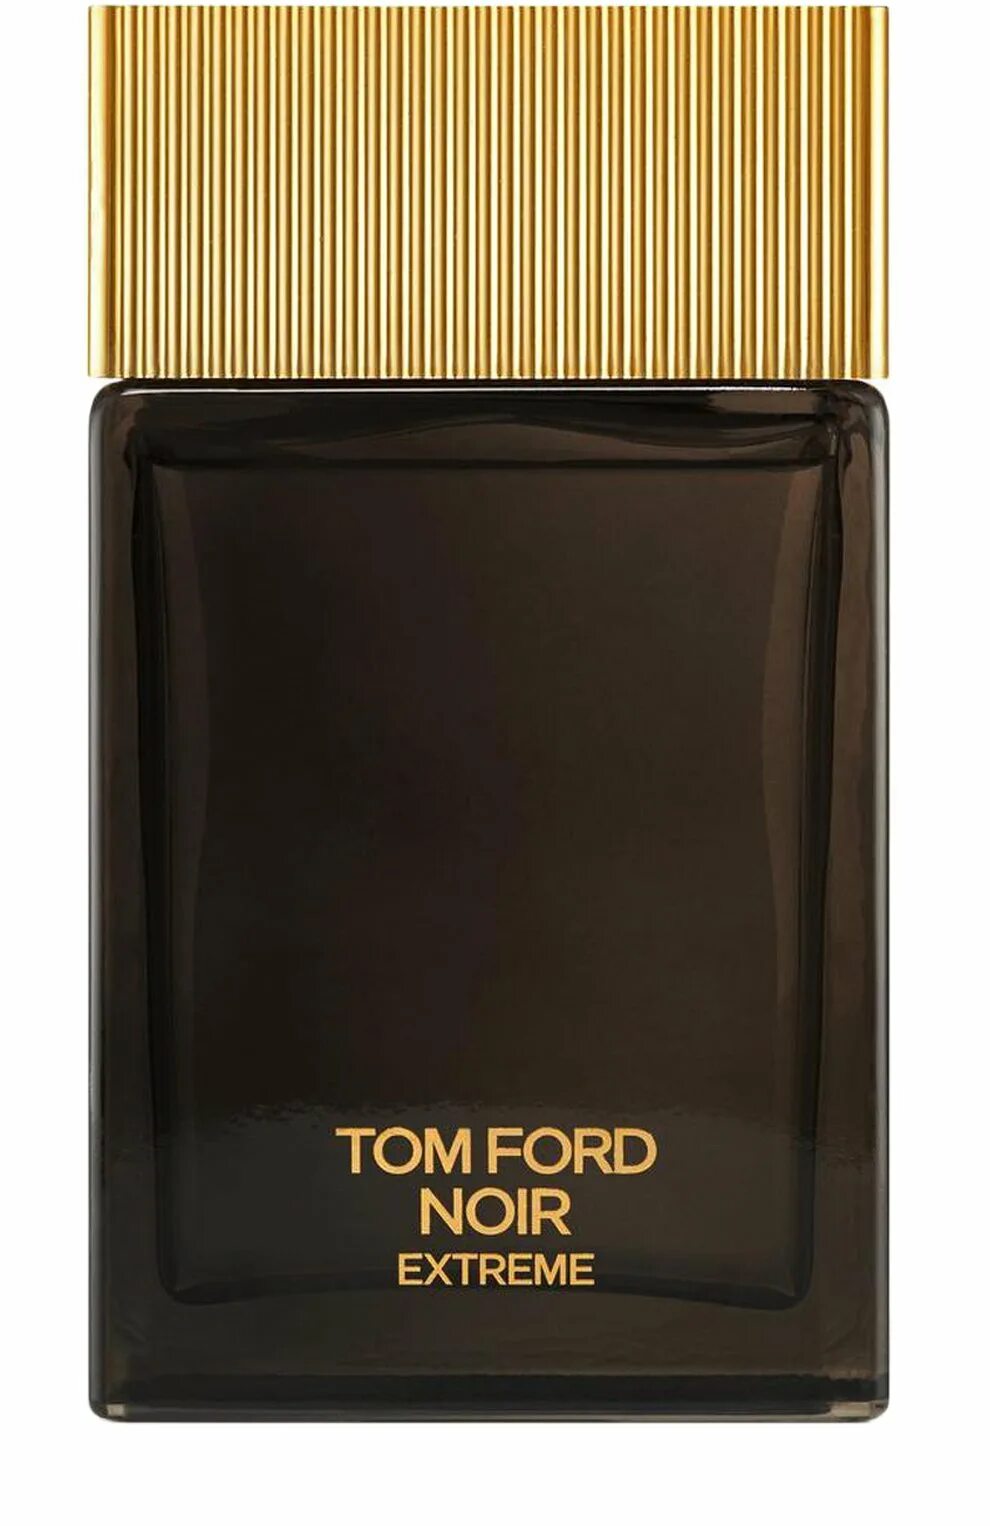 Том форд мужские. Tom Ford Noir extreme 100ml. Духи Tom Ford Noir extreme. Tom Ford Noir extreme Eau de Parfum 100 ml. Tom Ford Noir extreme 100ml EDP.